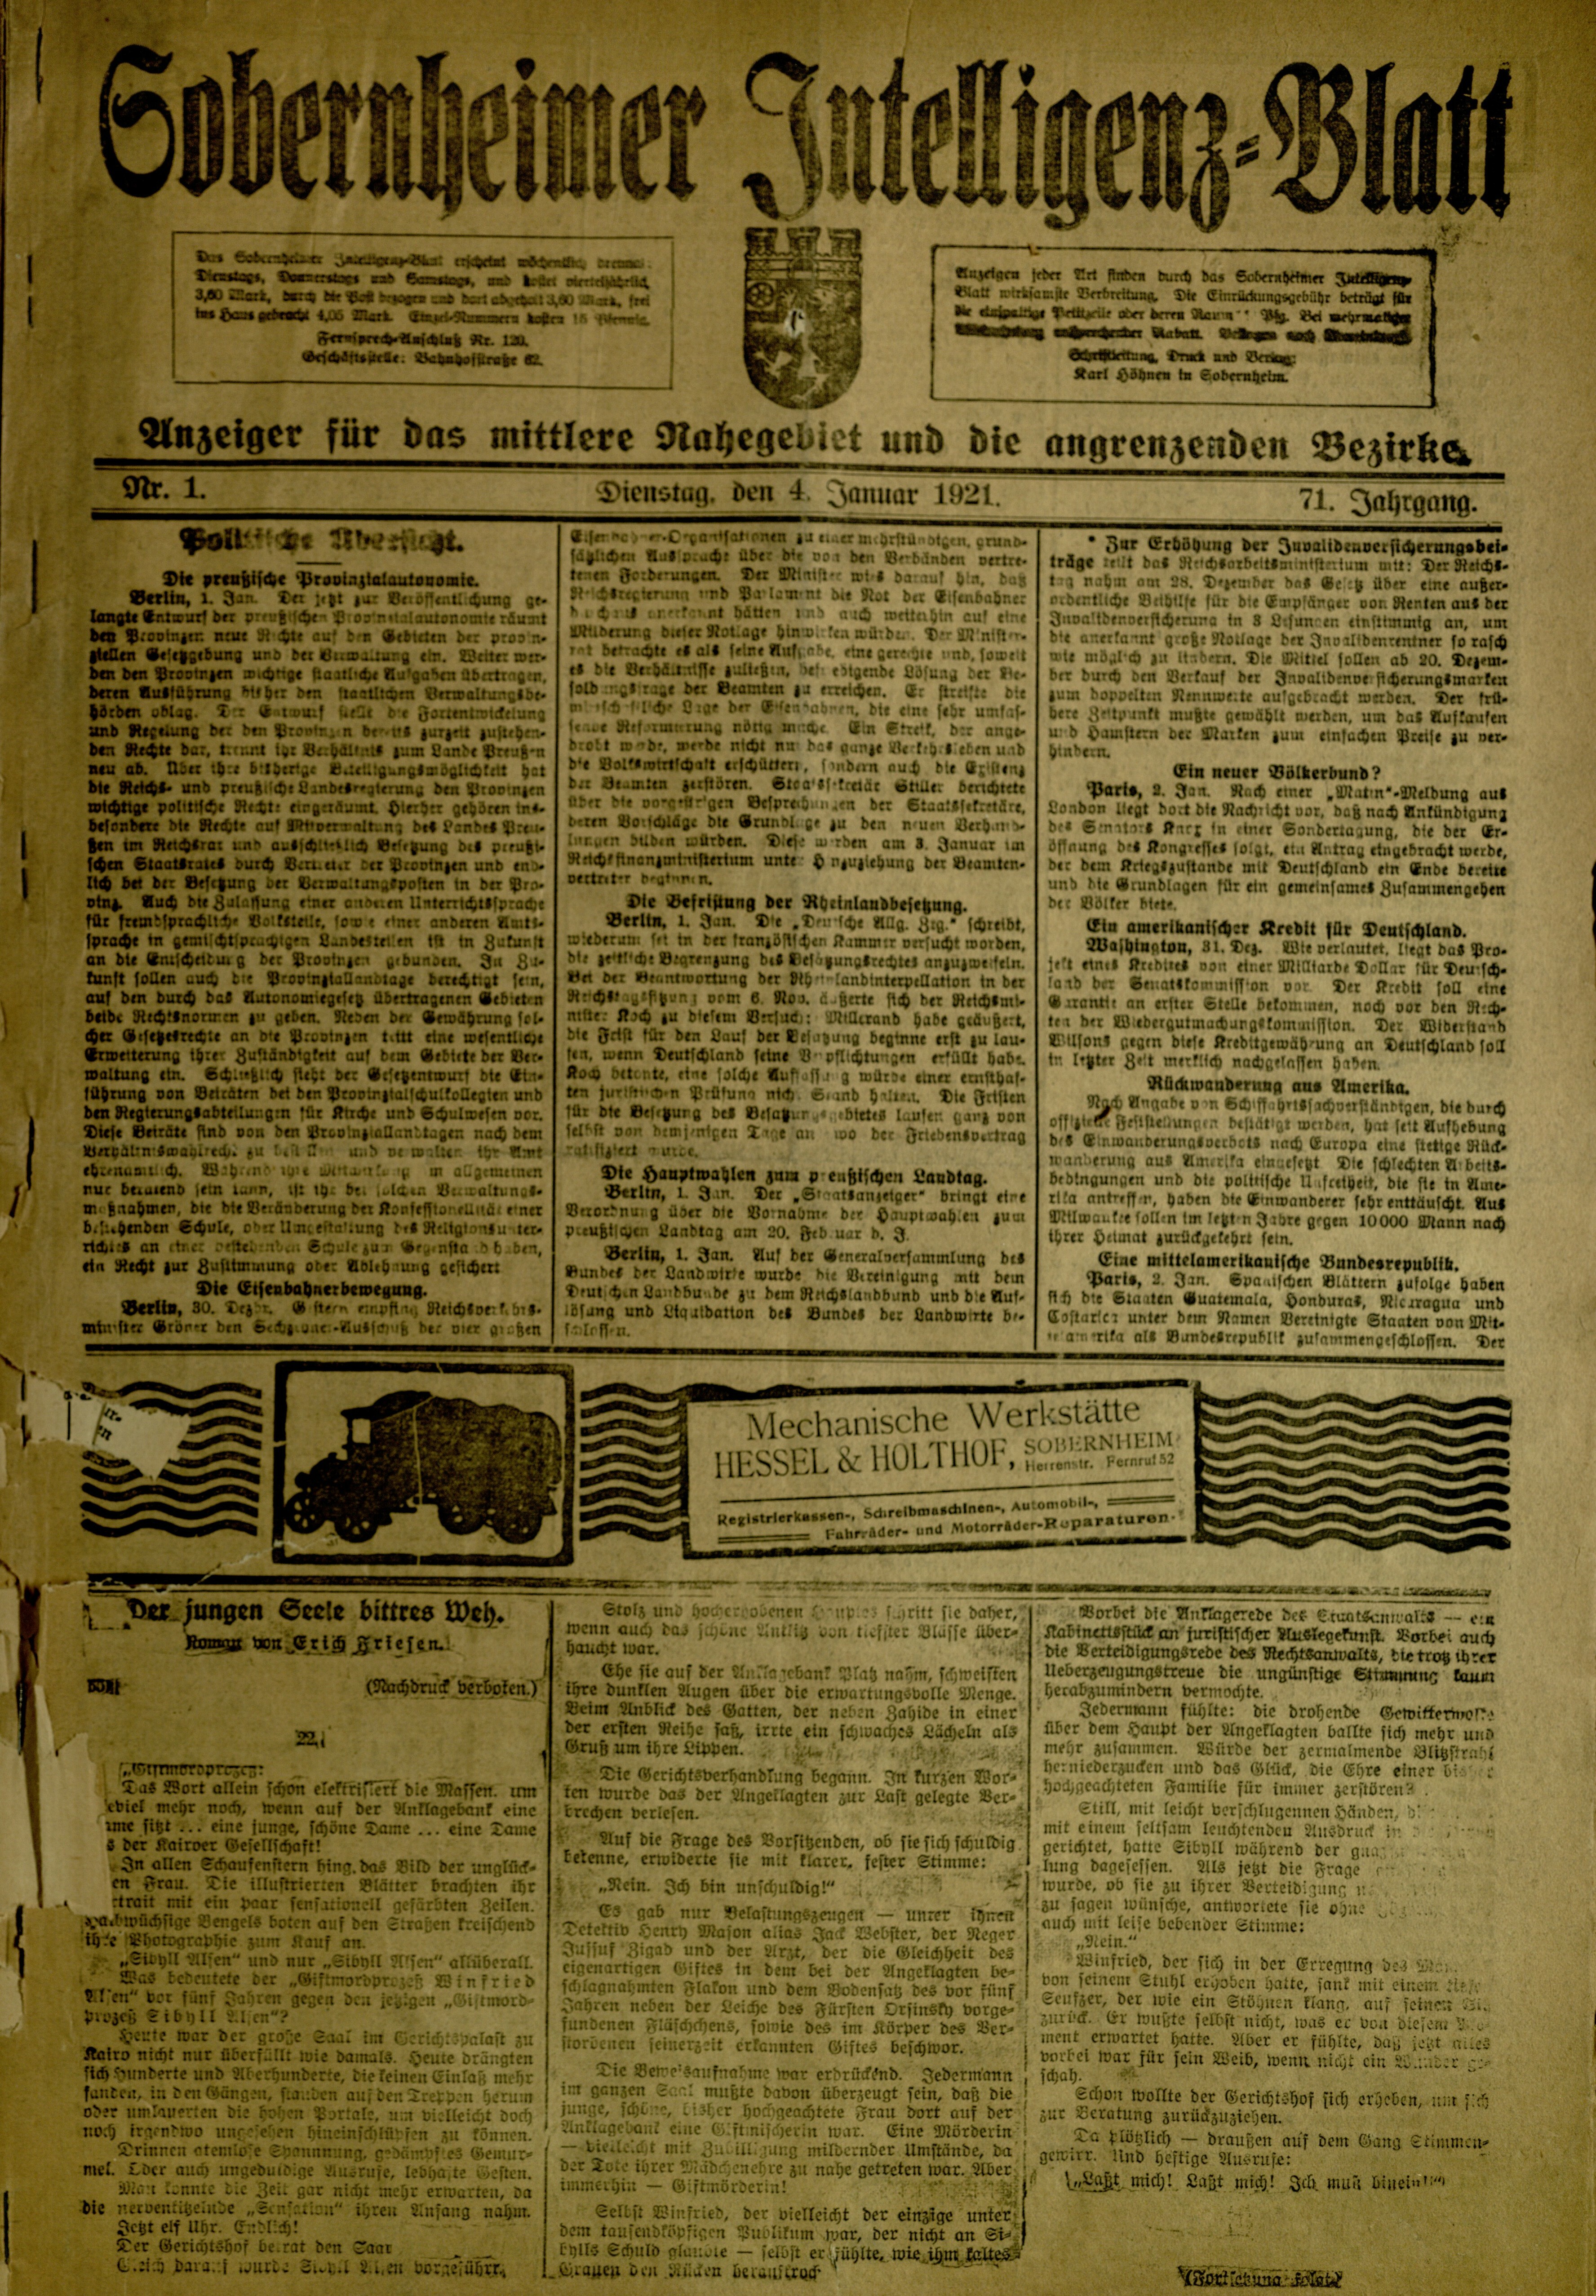 Zeitung: Sobernheimer Intelligenzblatt; Januar 1921, Jg. 72 Nr. 1 (Heimatmuseum Bad Sobernheim CC BY-NC-SA)